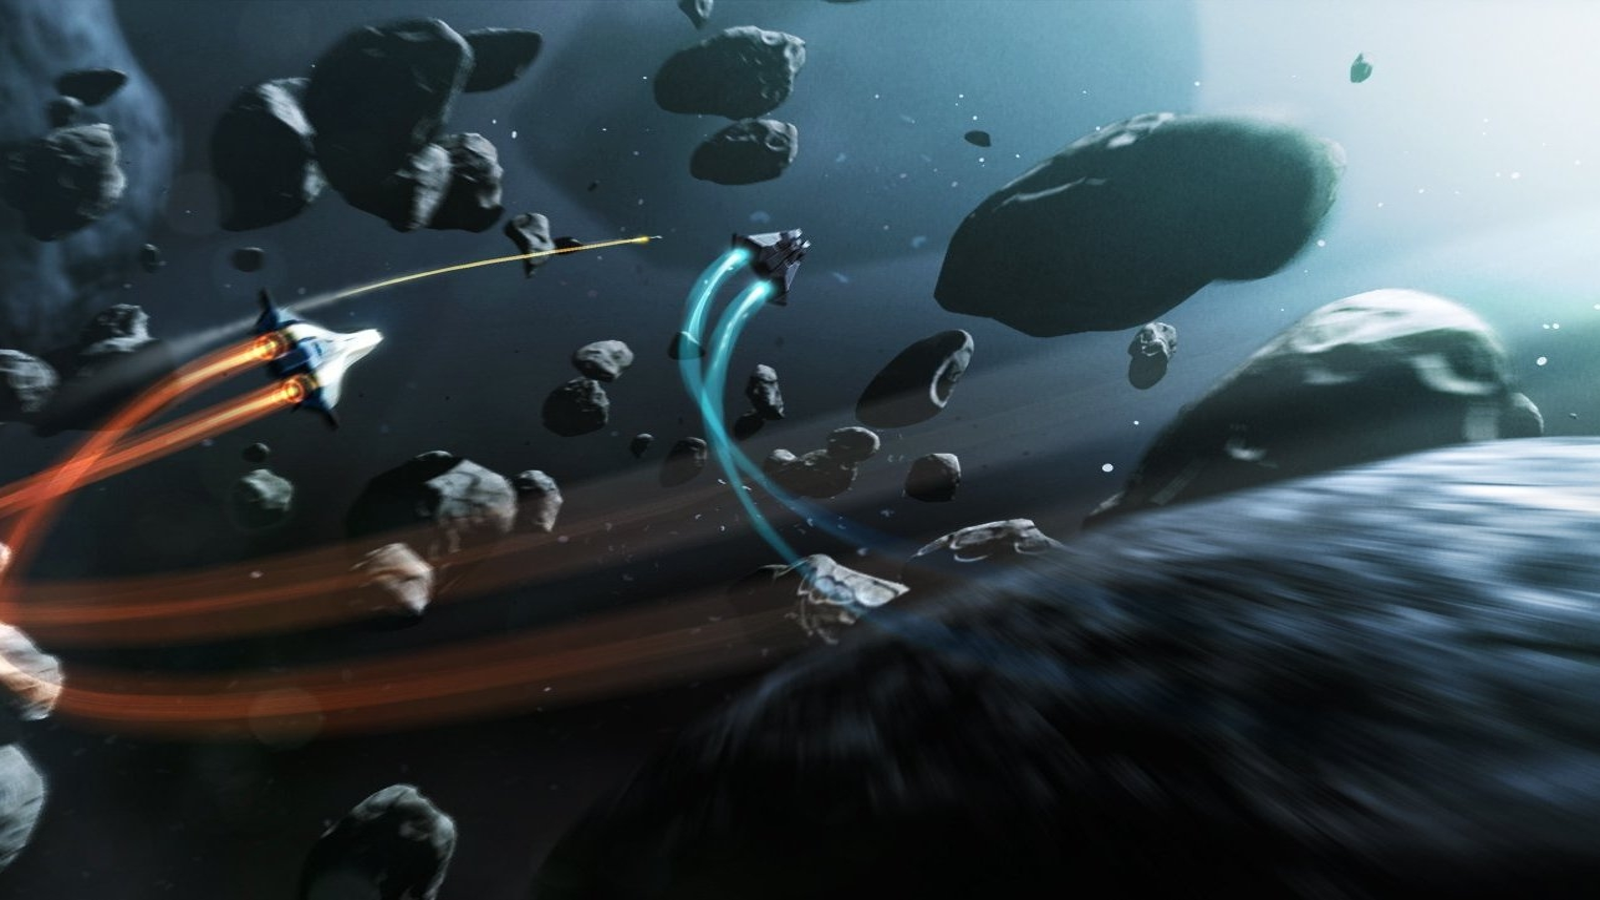 Elite Dangerous: Odyssey Review In Progress - Bumpy Landing